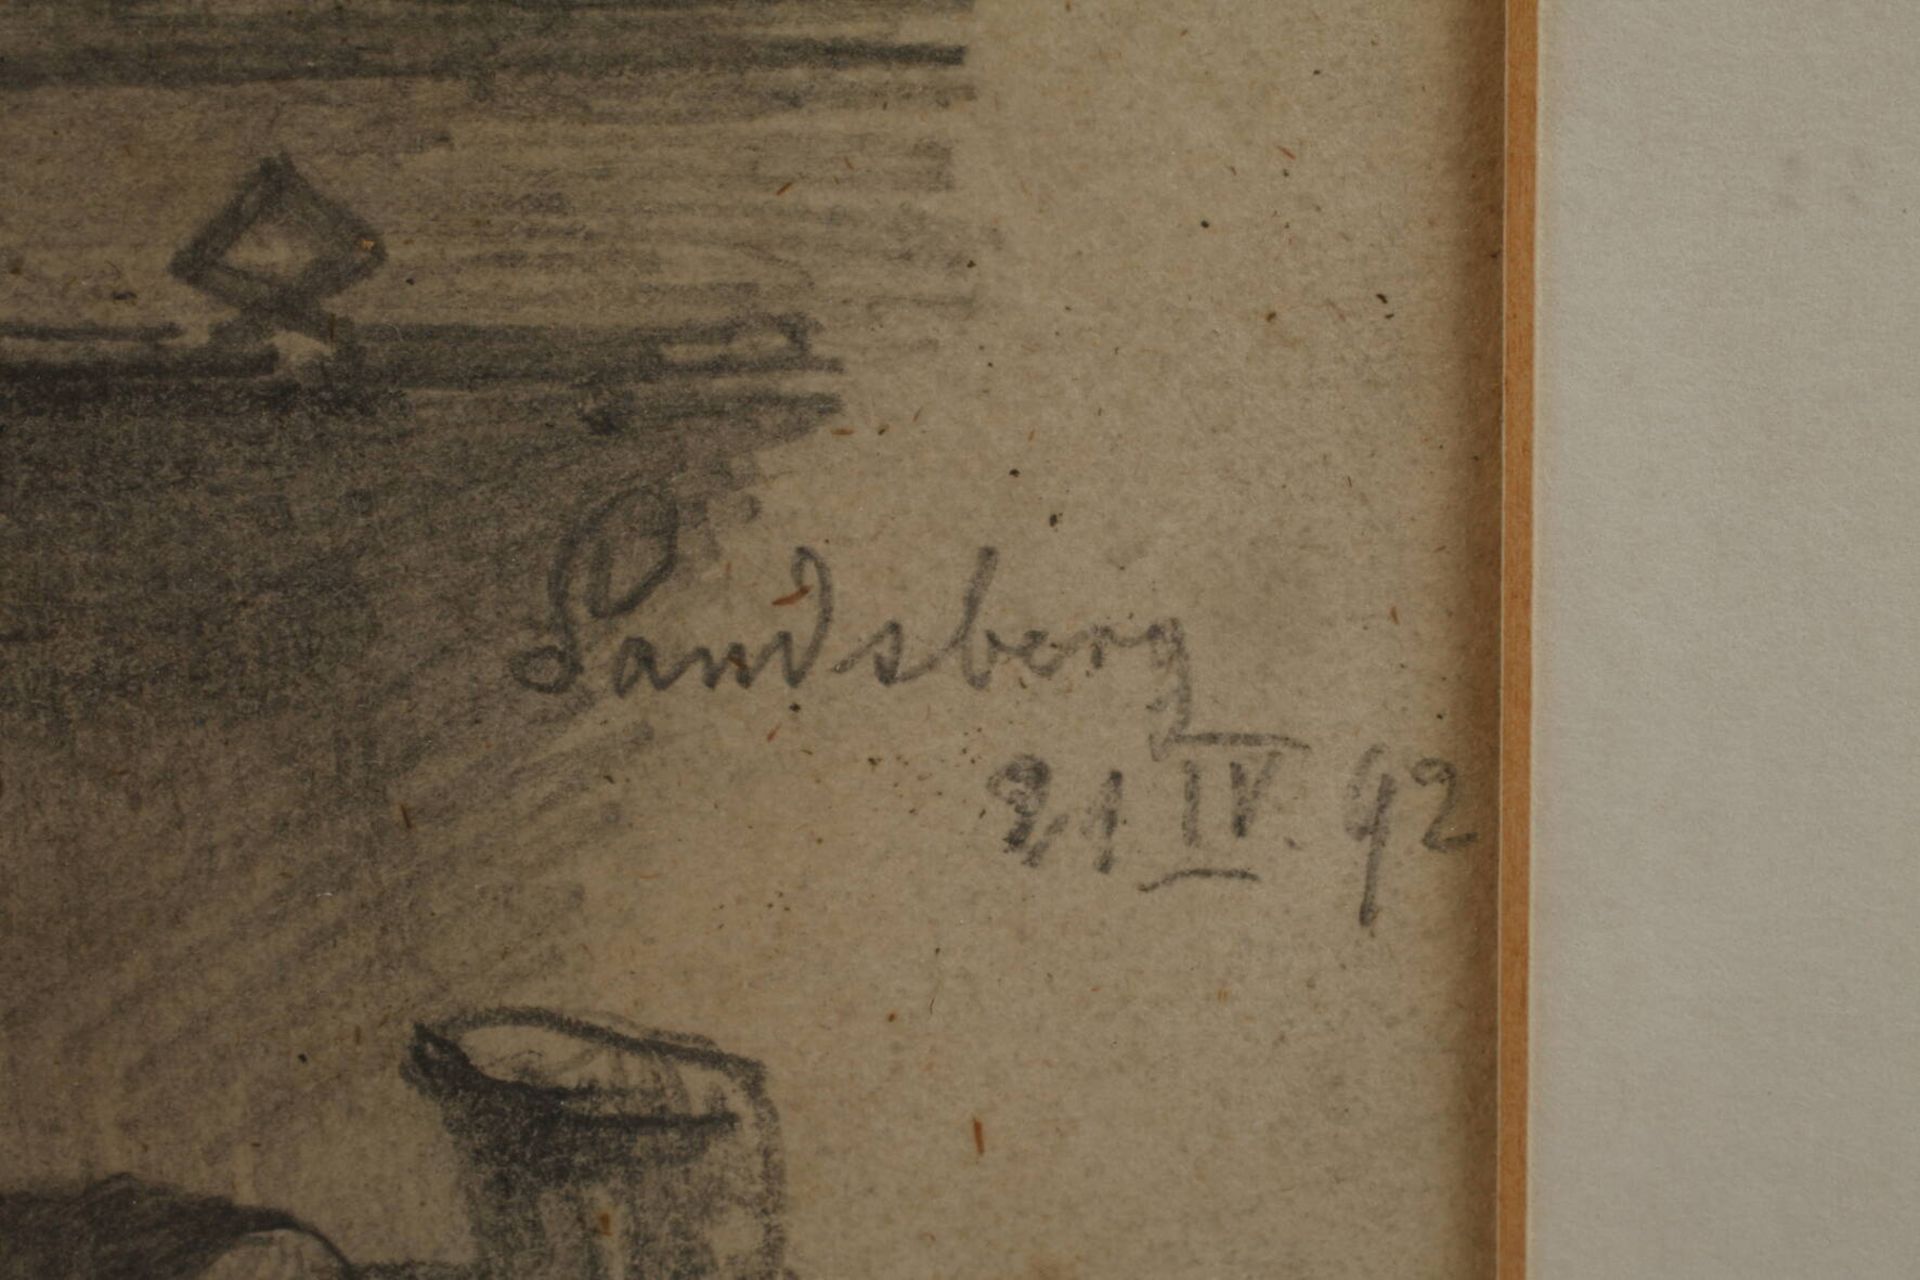 Landsberg, Interieur - Image 3 of 3